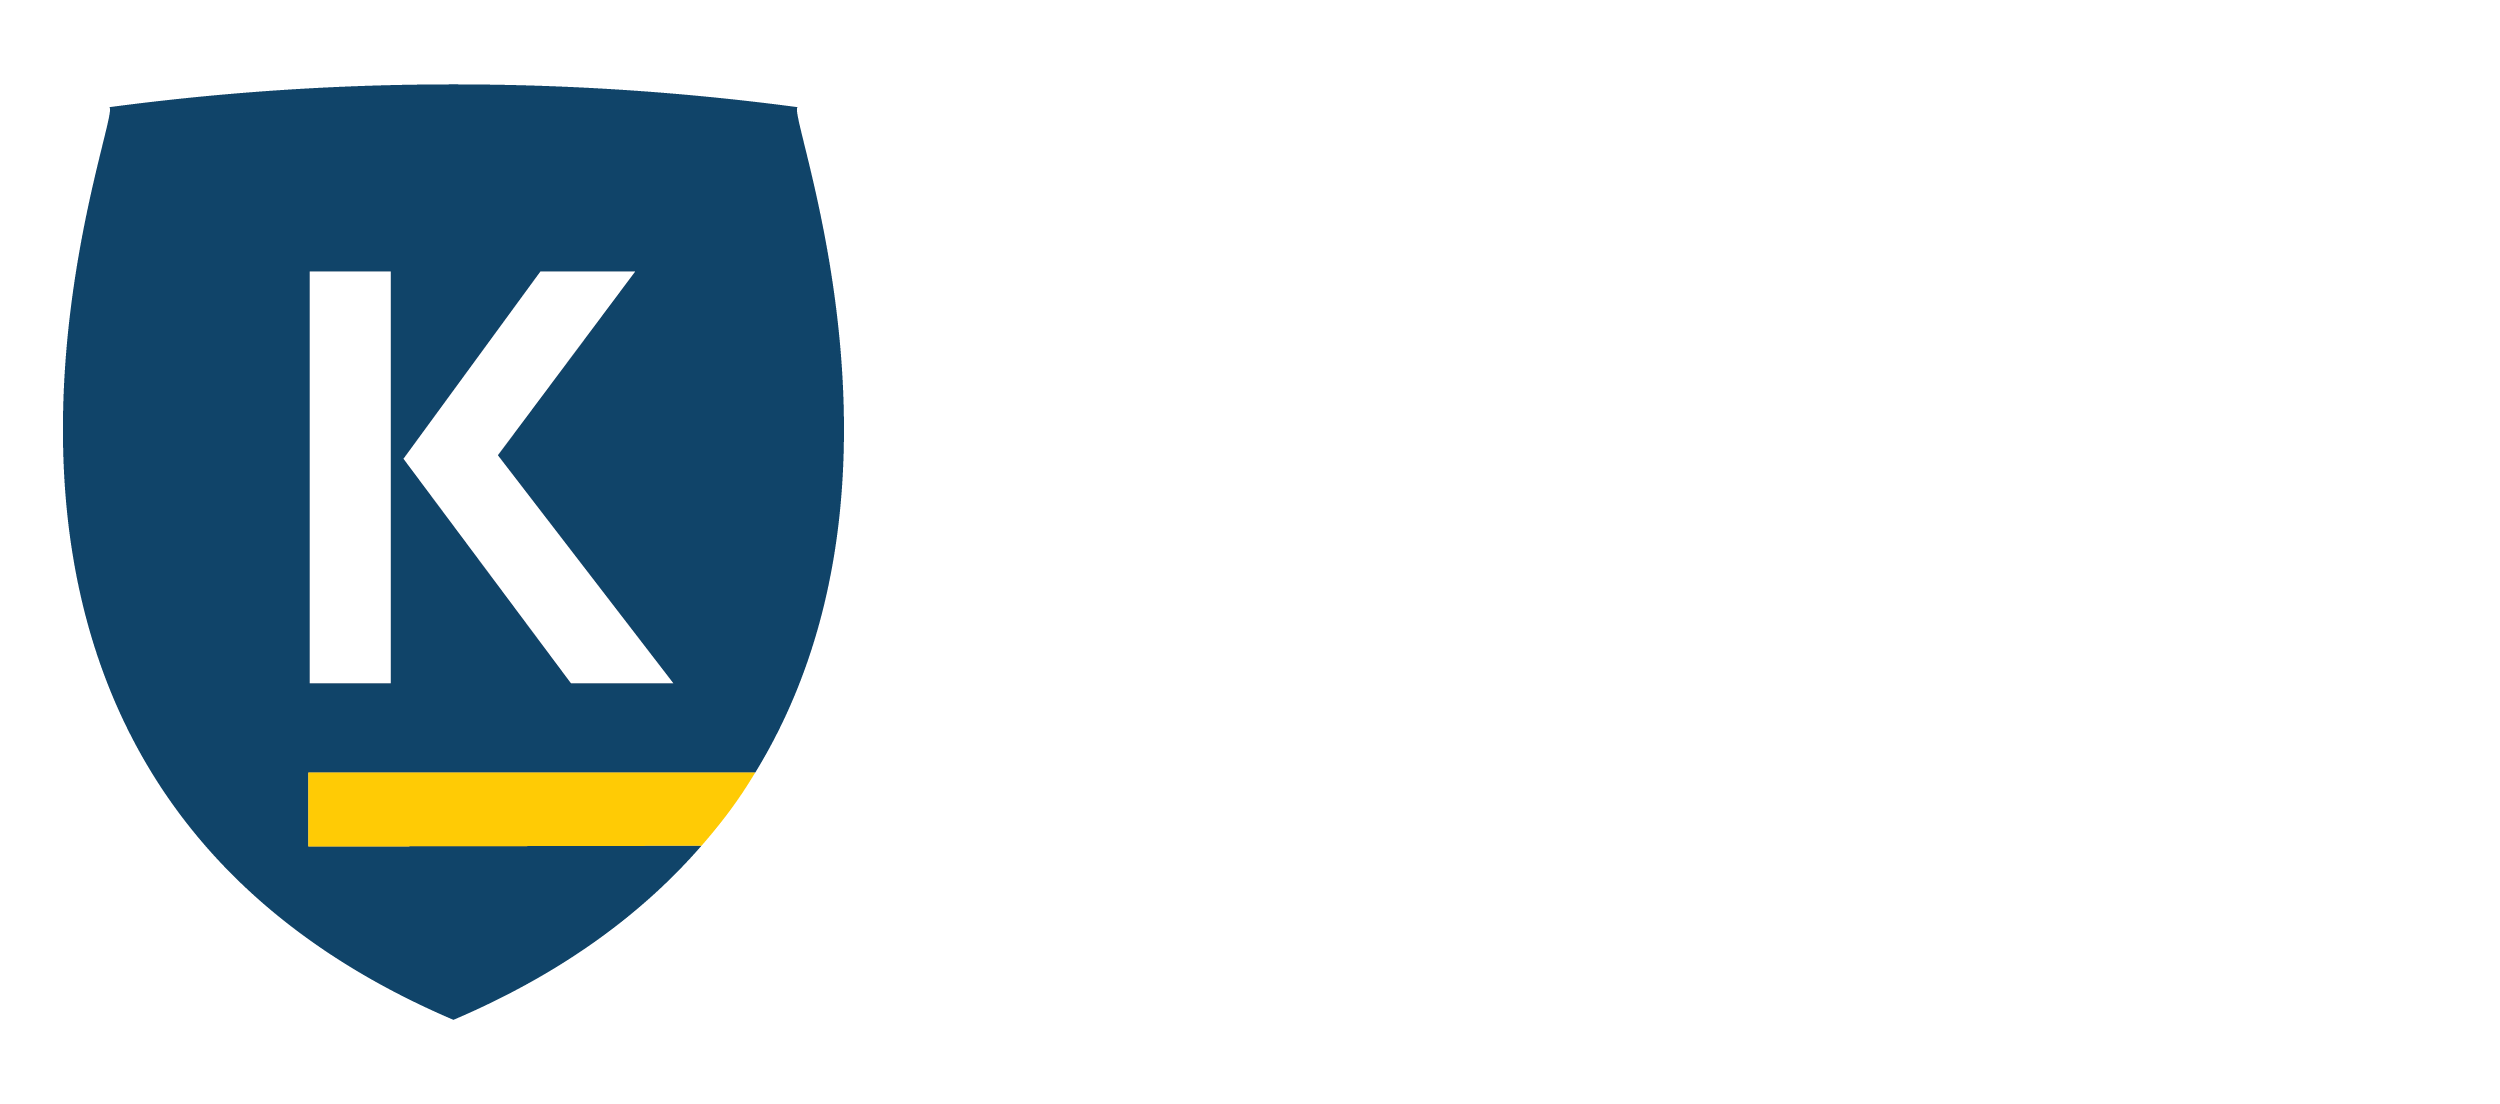 https://info.kensingtonassetmanagement.com/hubfs/New%20Images/Kensington%20AM%20logo_blue-white.png